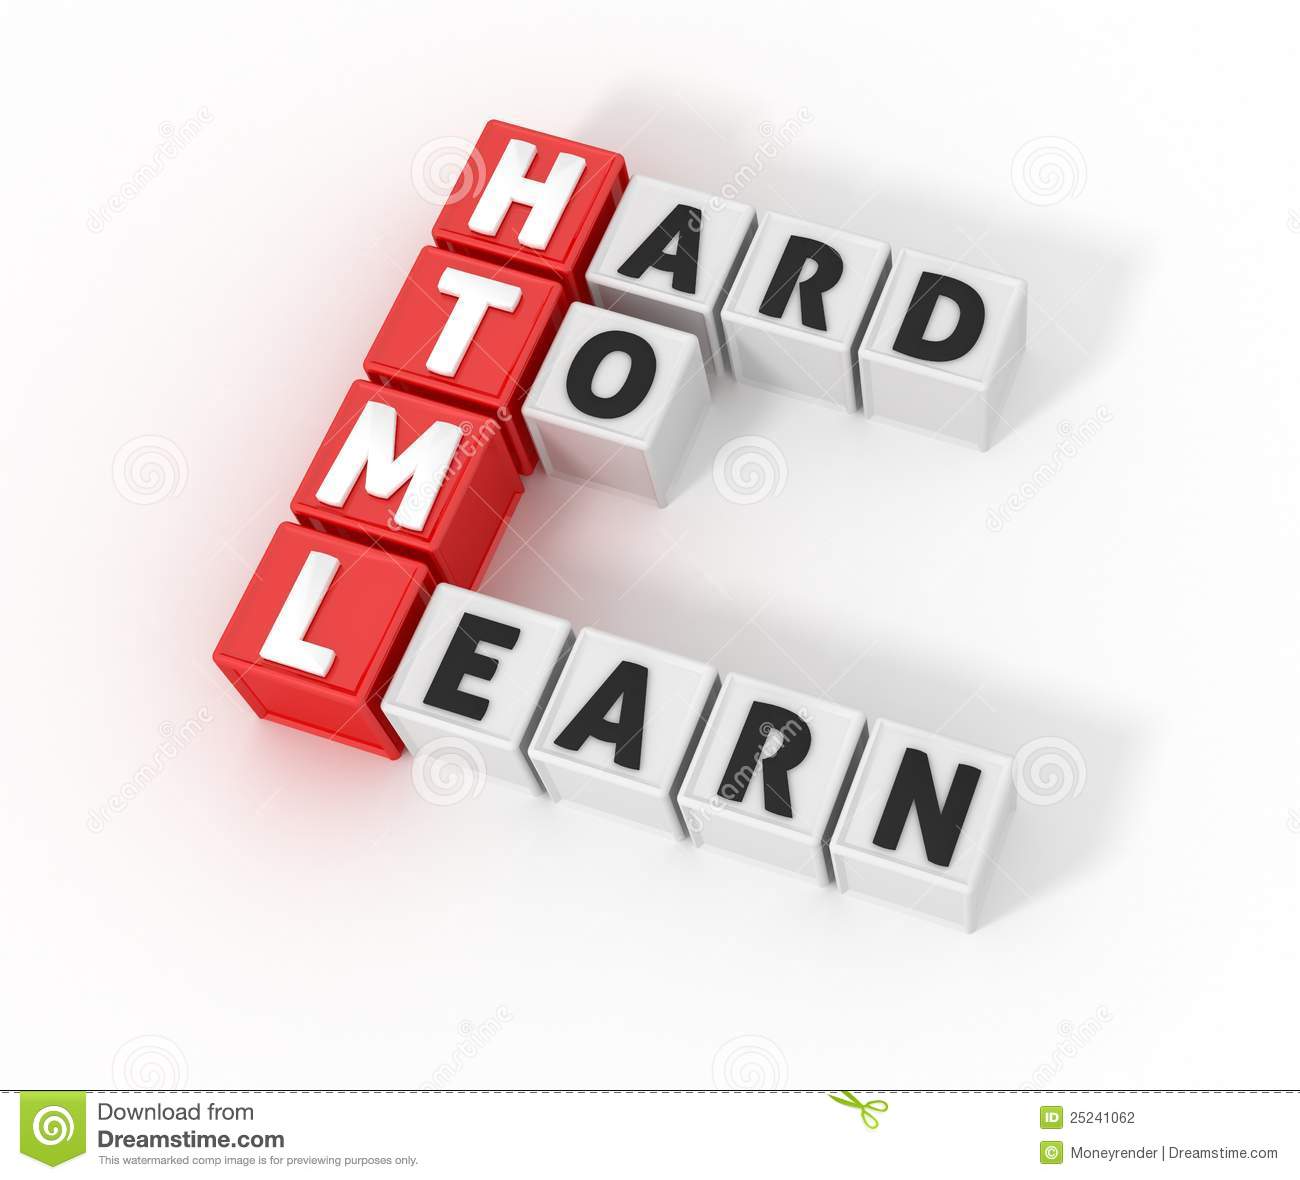 html-definition-hard-to-learn-25241062.jpg